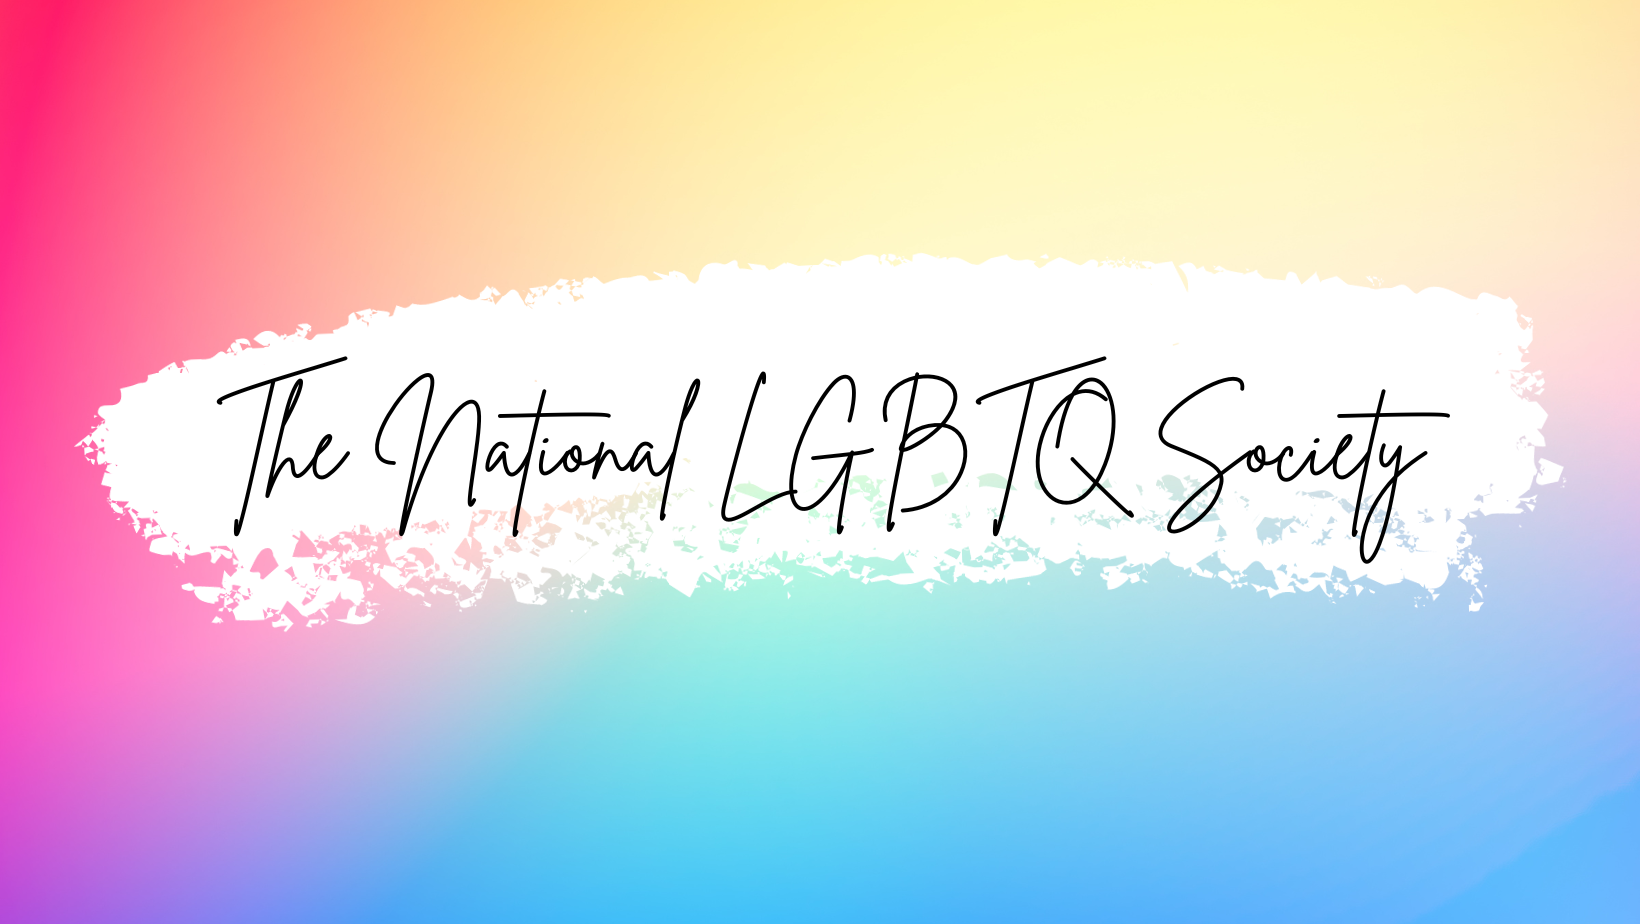 The National LGBTQ Society